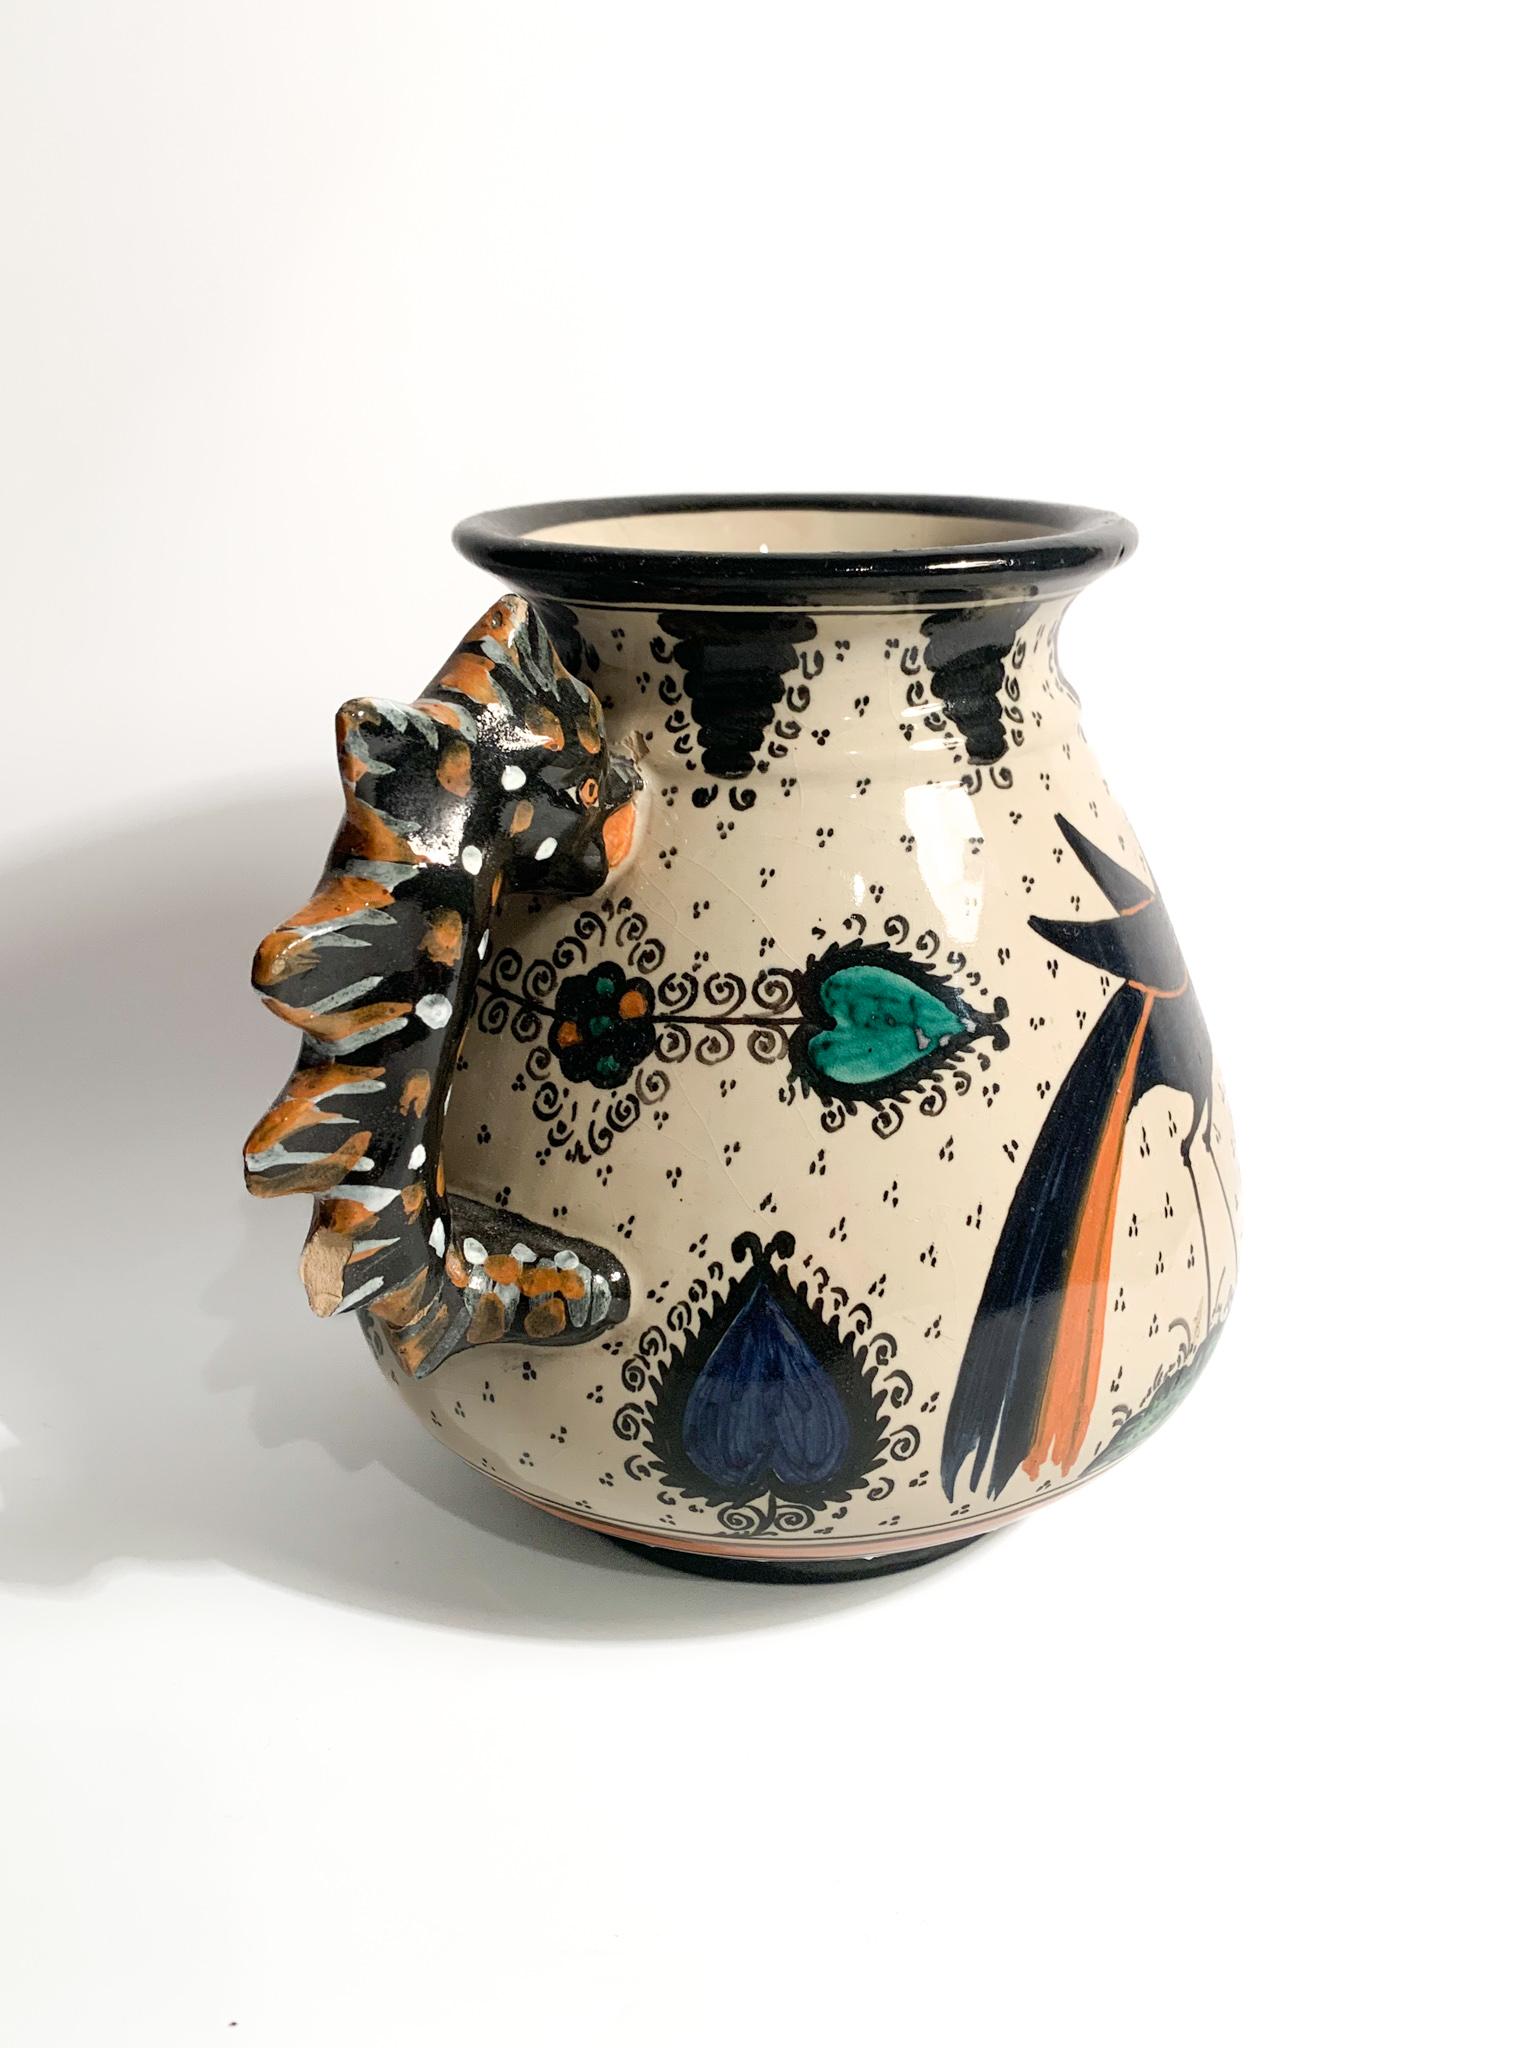 Italian Hand-Painted Ceramic Vase by Molaroni Pesaro from the 1950s